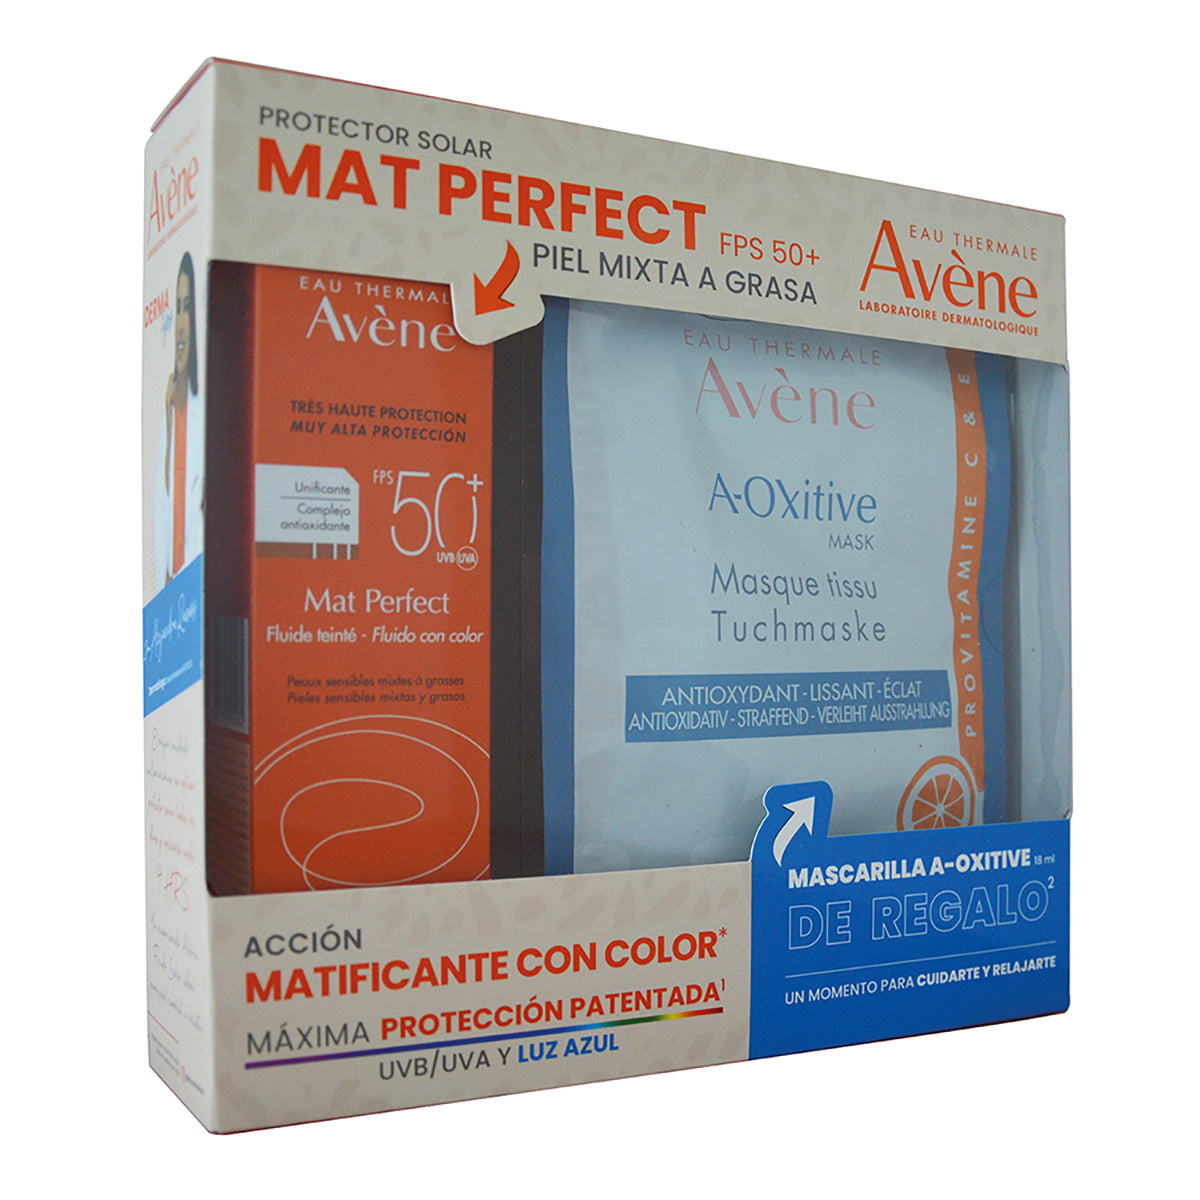 Avene kit protector solar mat perfect fps50+ 50ml + Mascarilla a-oxitive 18ml.